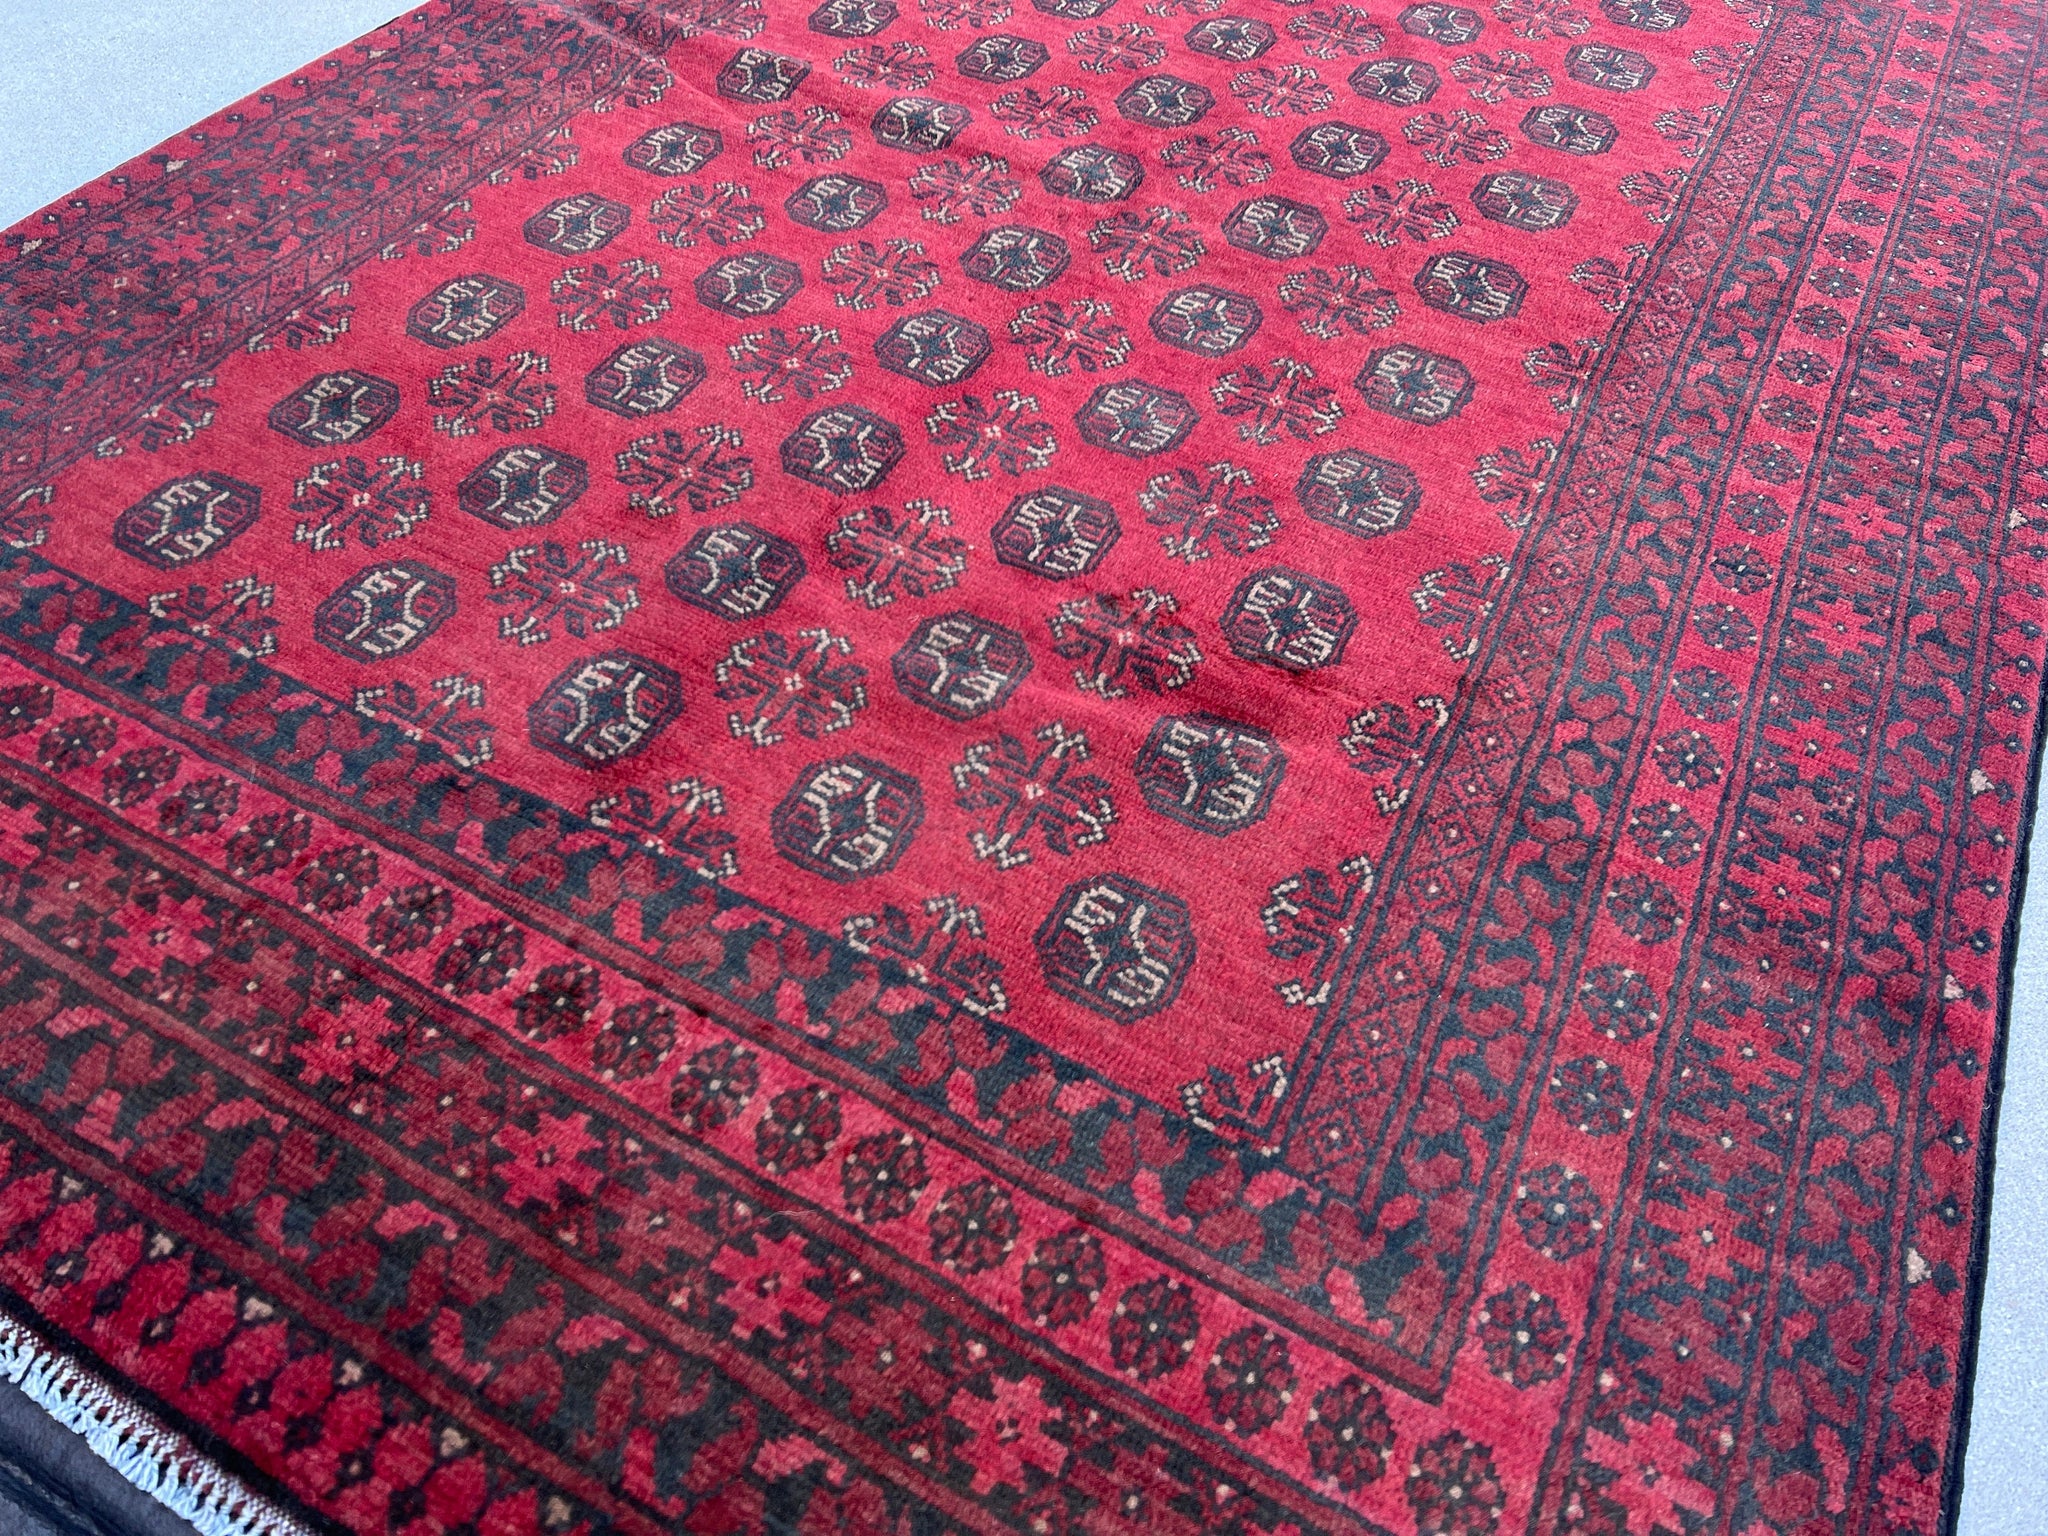 6x8 (180x245) Handmade Afghan Rug | Blood Red Black Beige | Hand Knotted Floral Persian Turkish Oriental Bohemian Wool